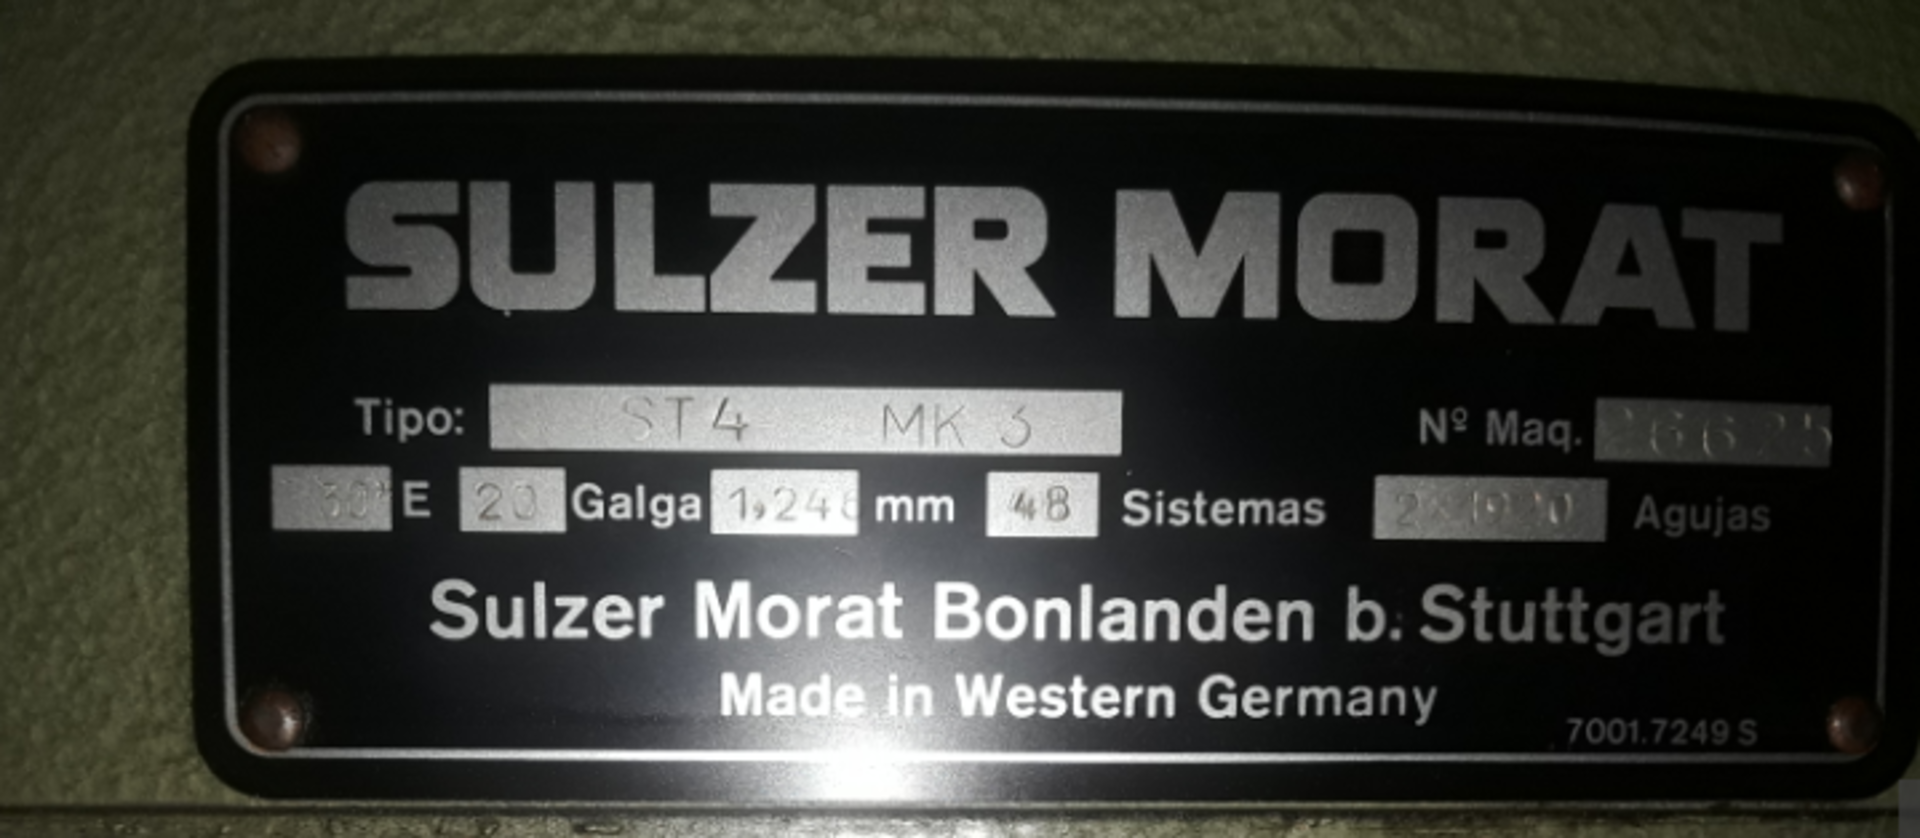 Sulzer Morat Knitting Machine, Model ST4-MK3, 48 Feeds, 30 Diameter, Rigging Fee For This Item $250 - Image 2 of 2